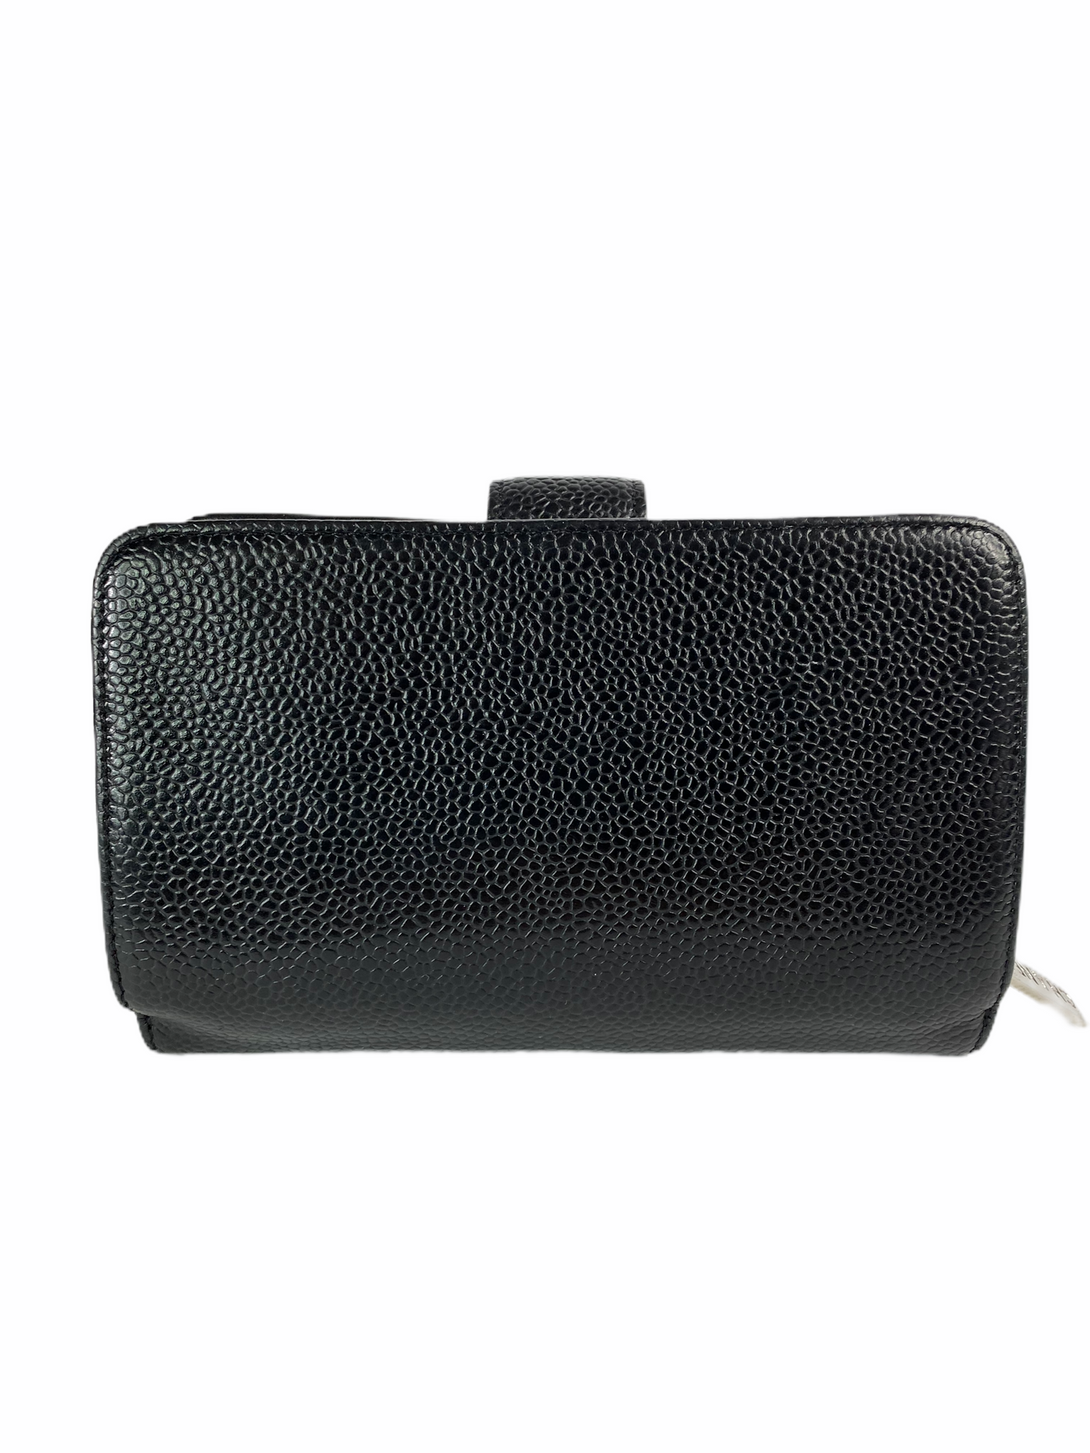 Chanel Black Caviar Leather Purse - Siopaella Designer Exchange